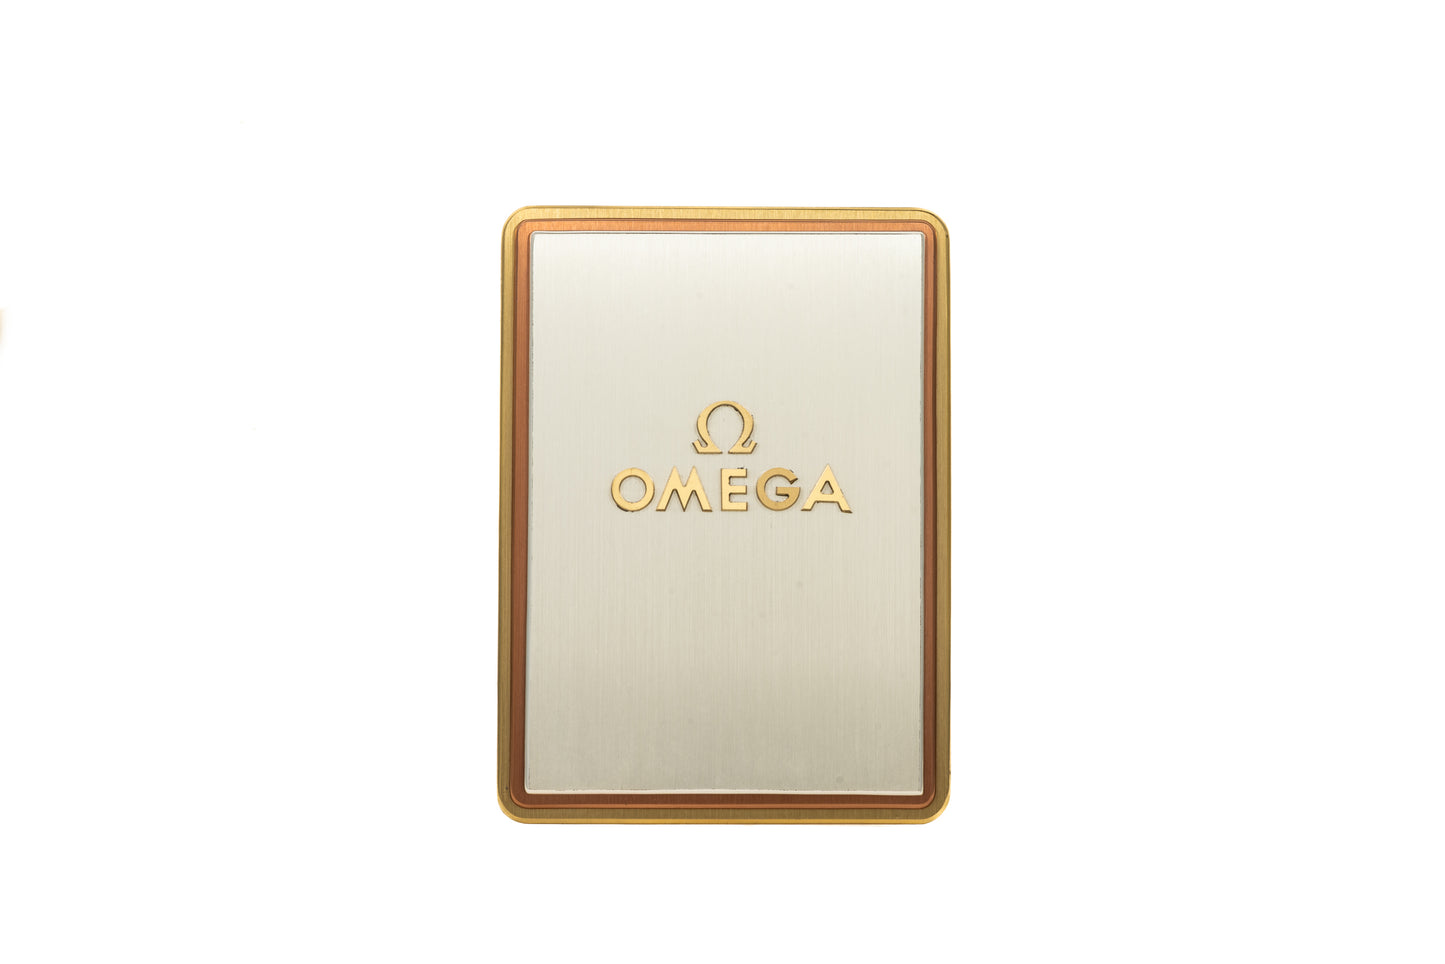 Omega Brass Display Plaque